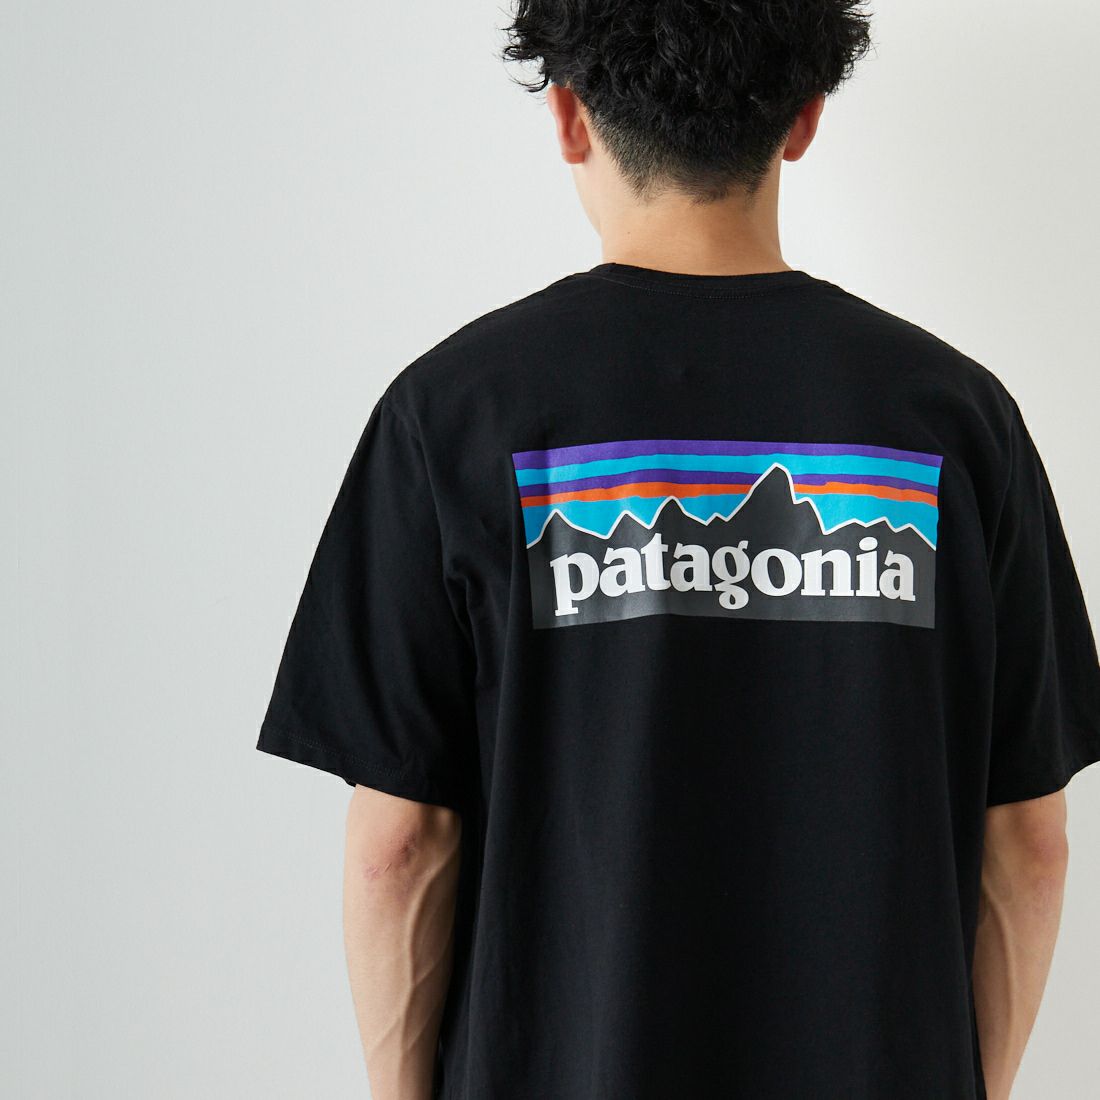 patagonia [パタゴニア] メンズ P-6ロゴ レスポンシビリティー [38504] BLK